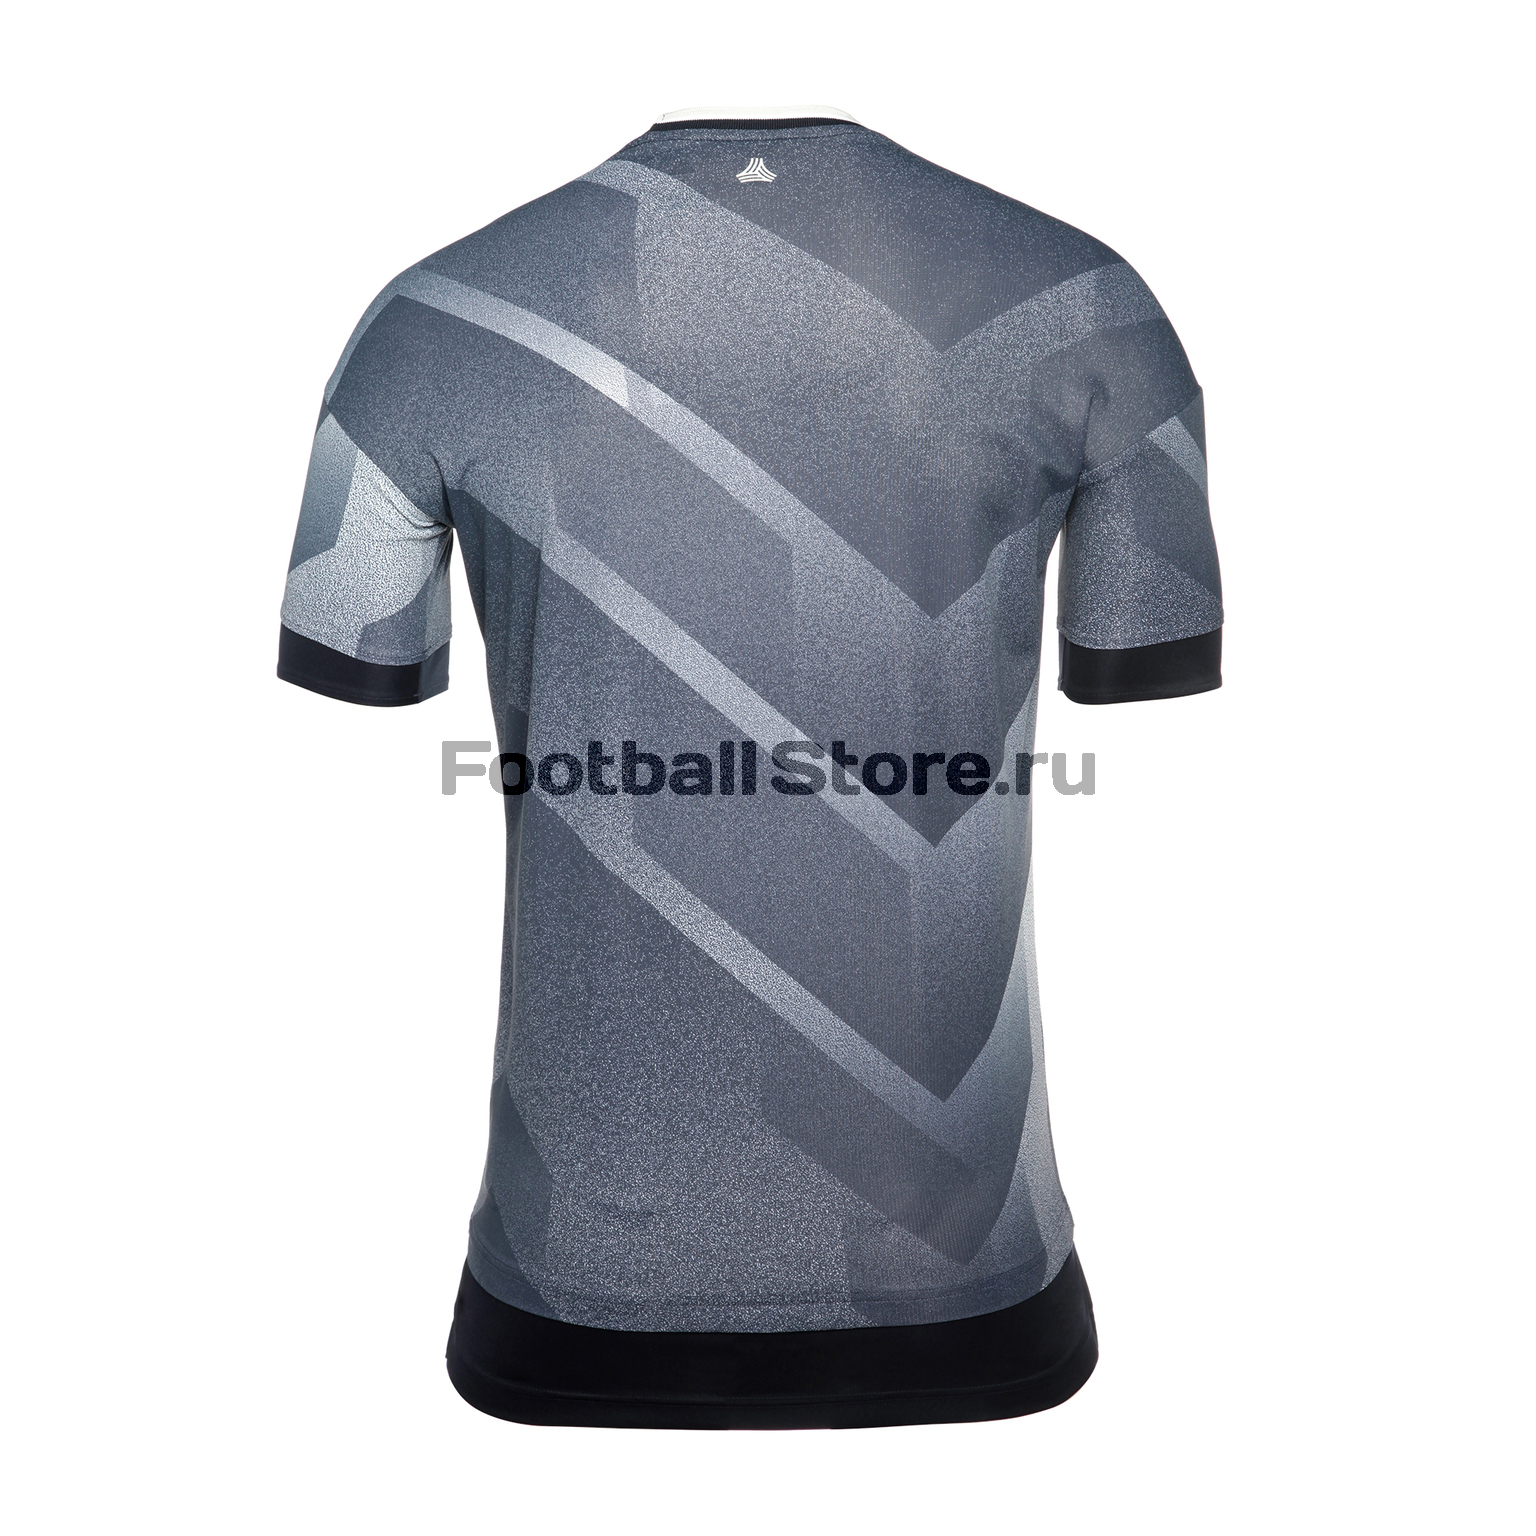 Футболка Adidas Tango JSY CE9571